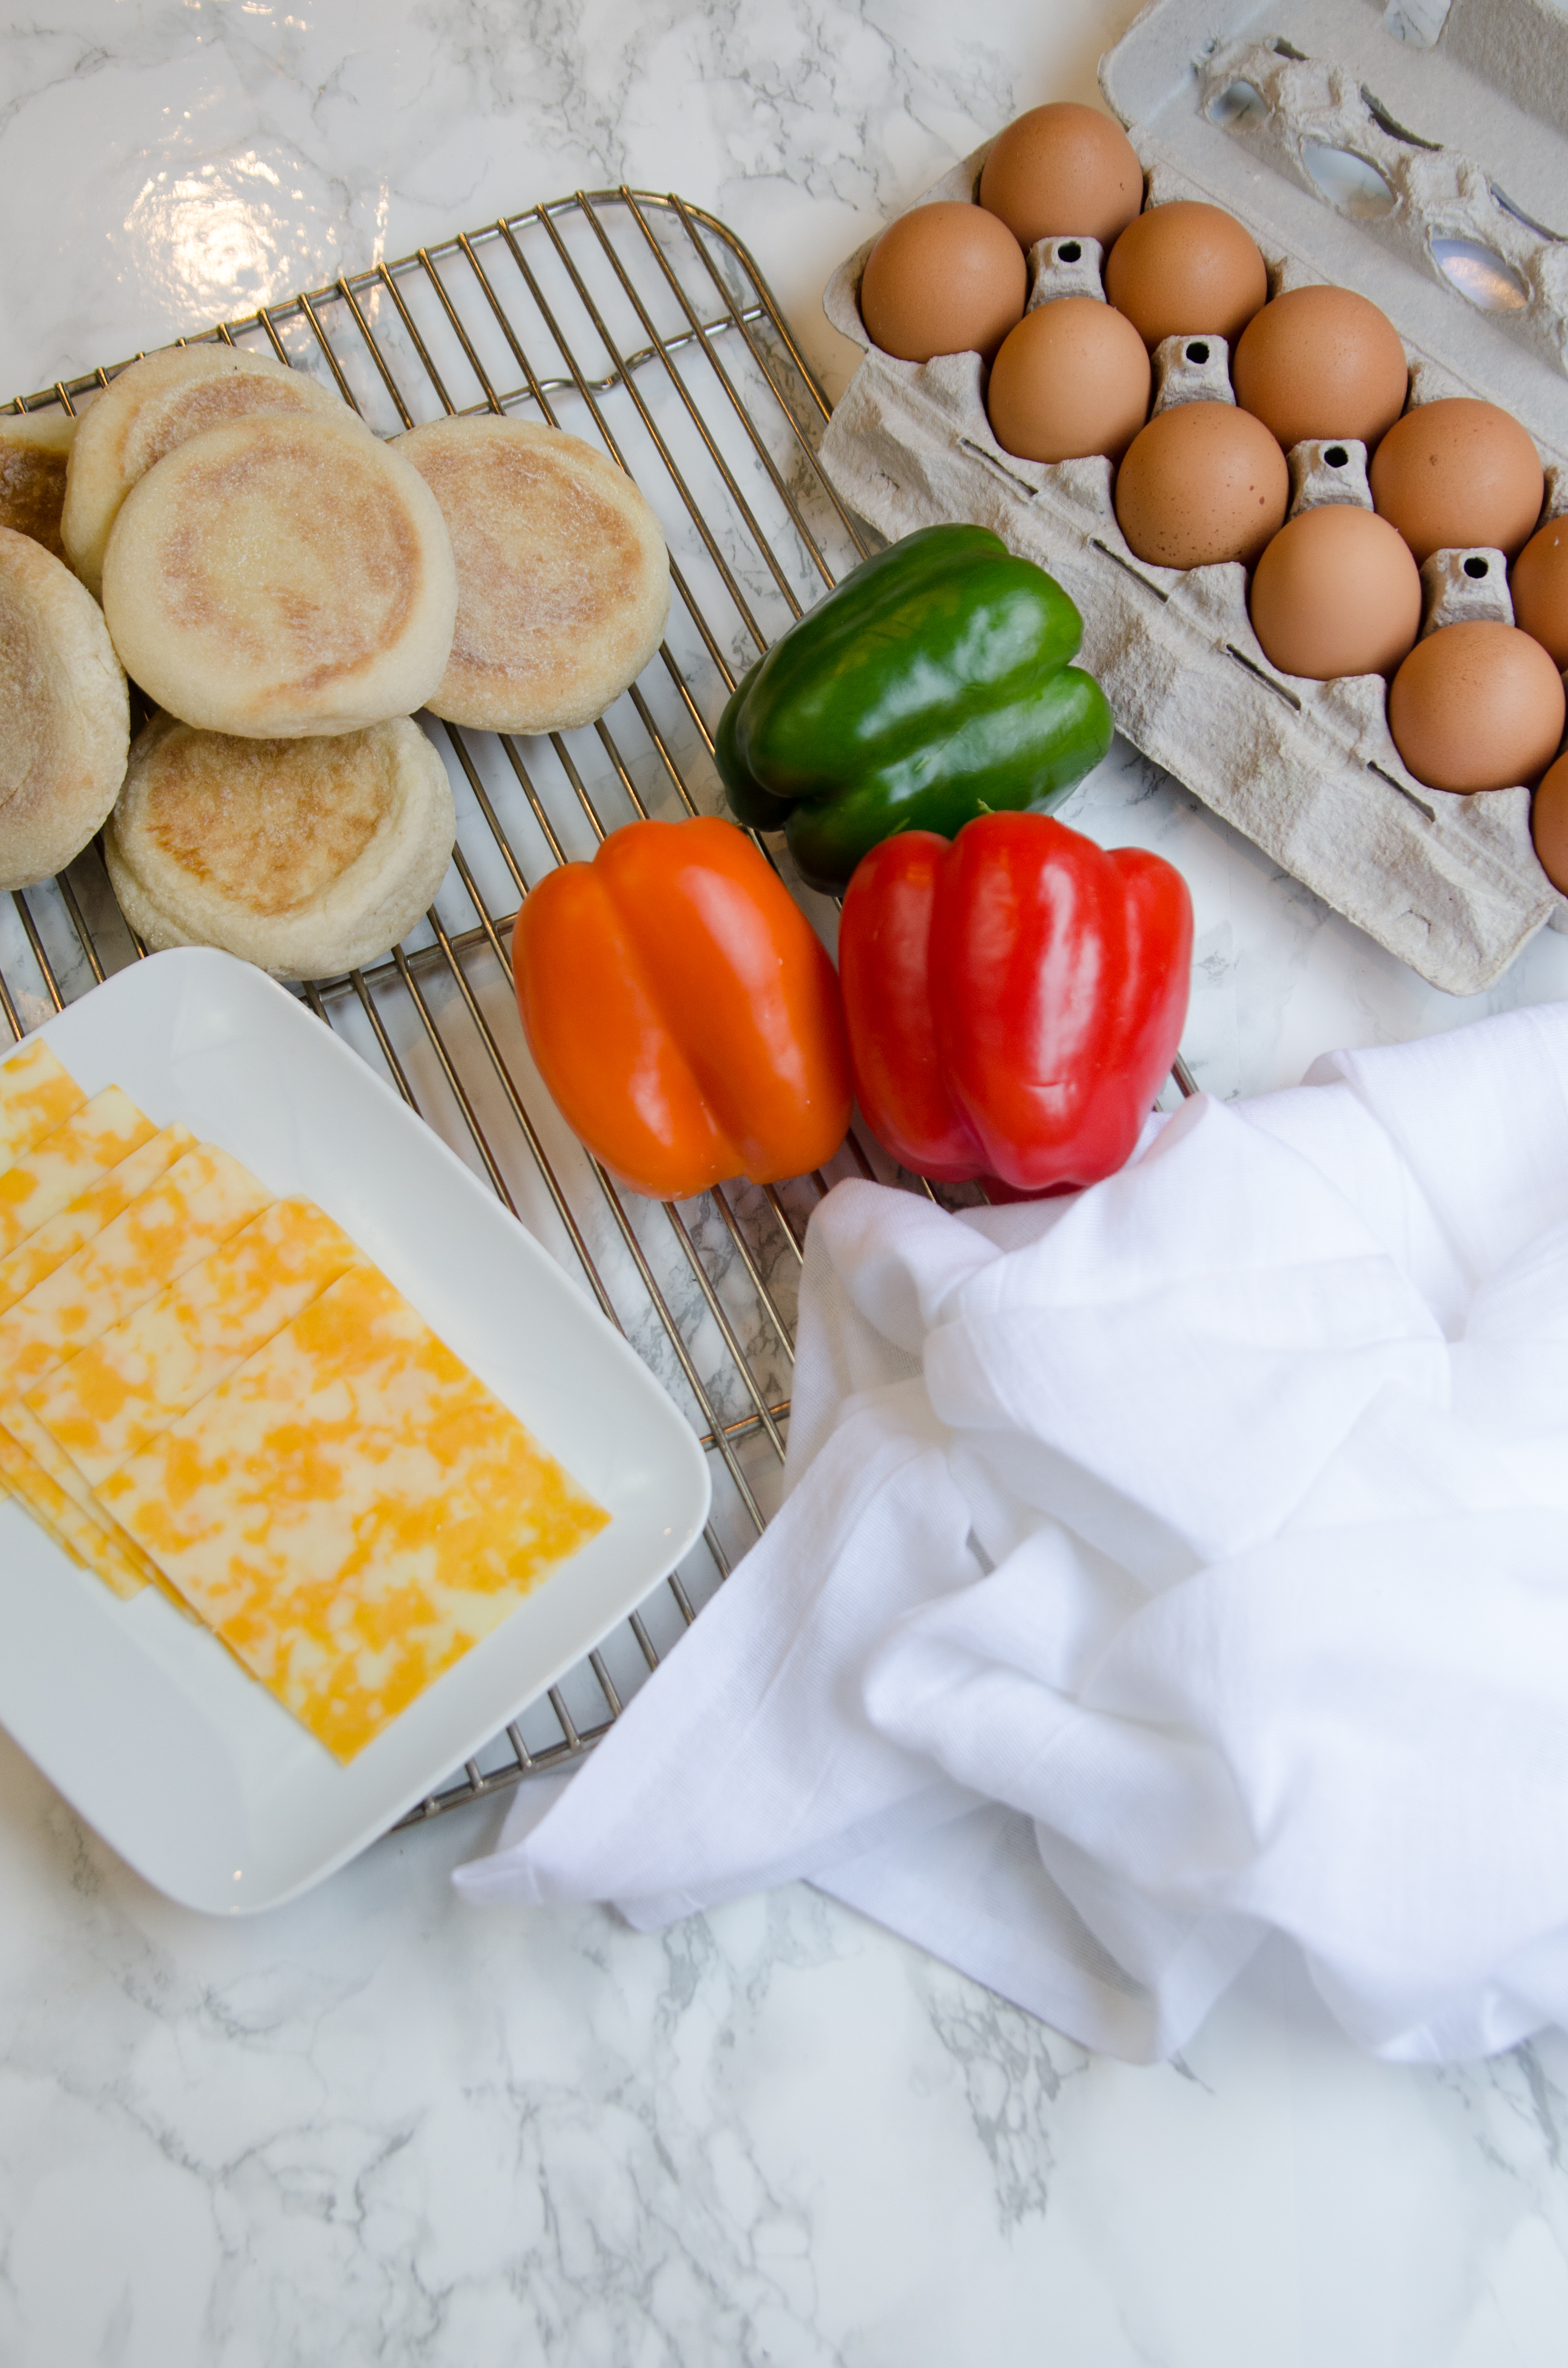 Ingredients make-ahead egg sandwiches